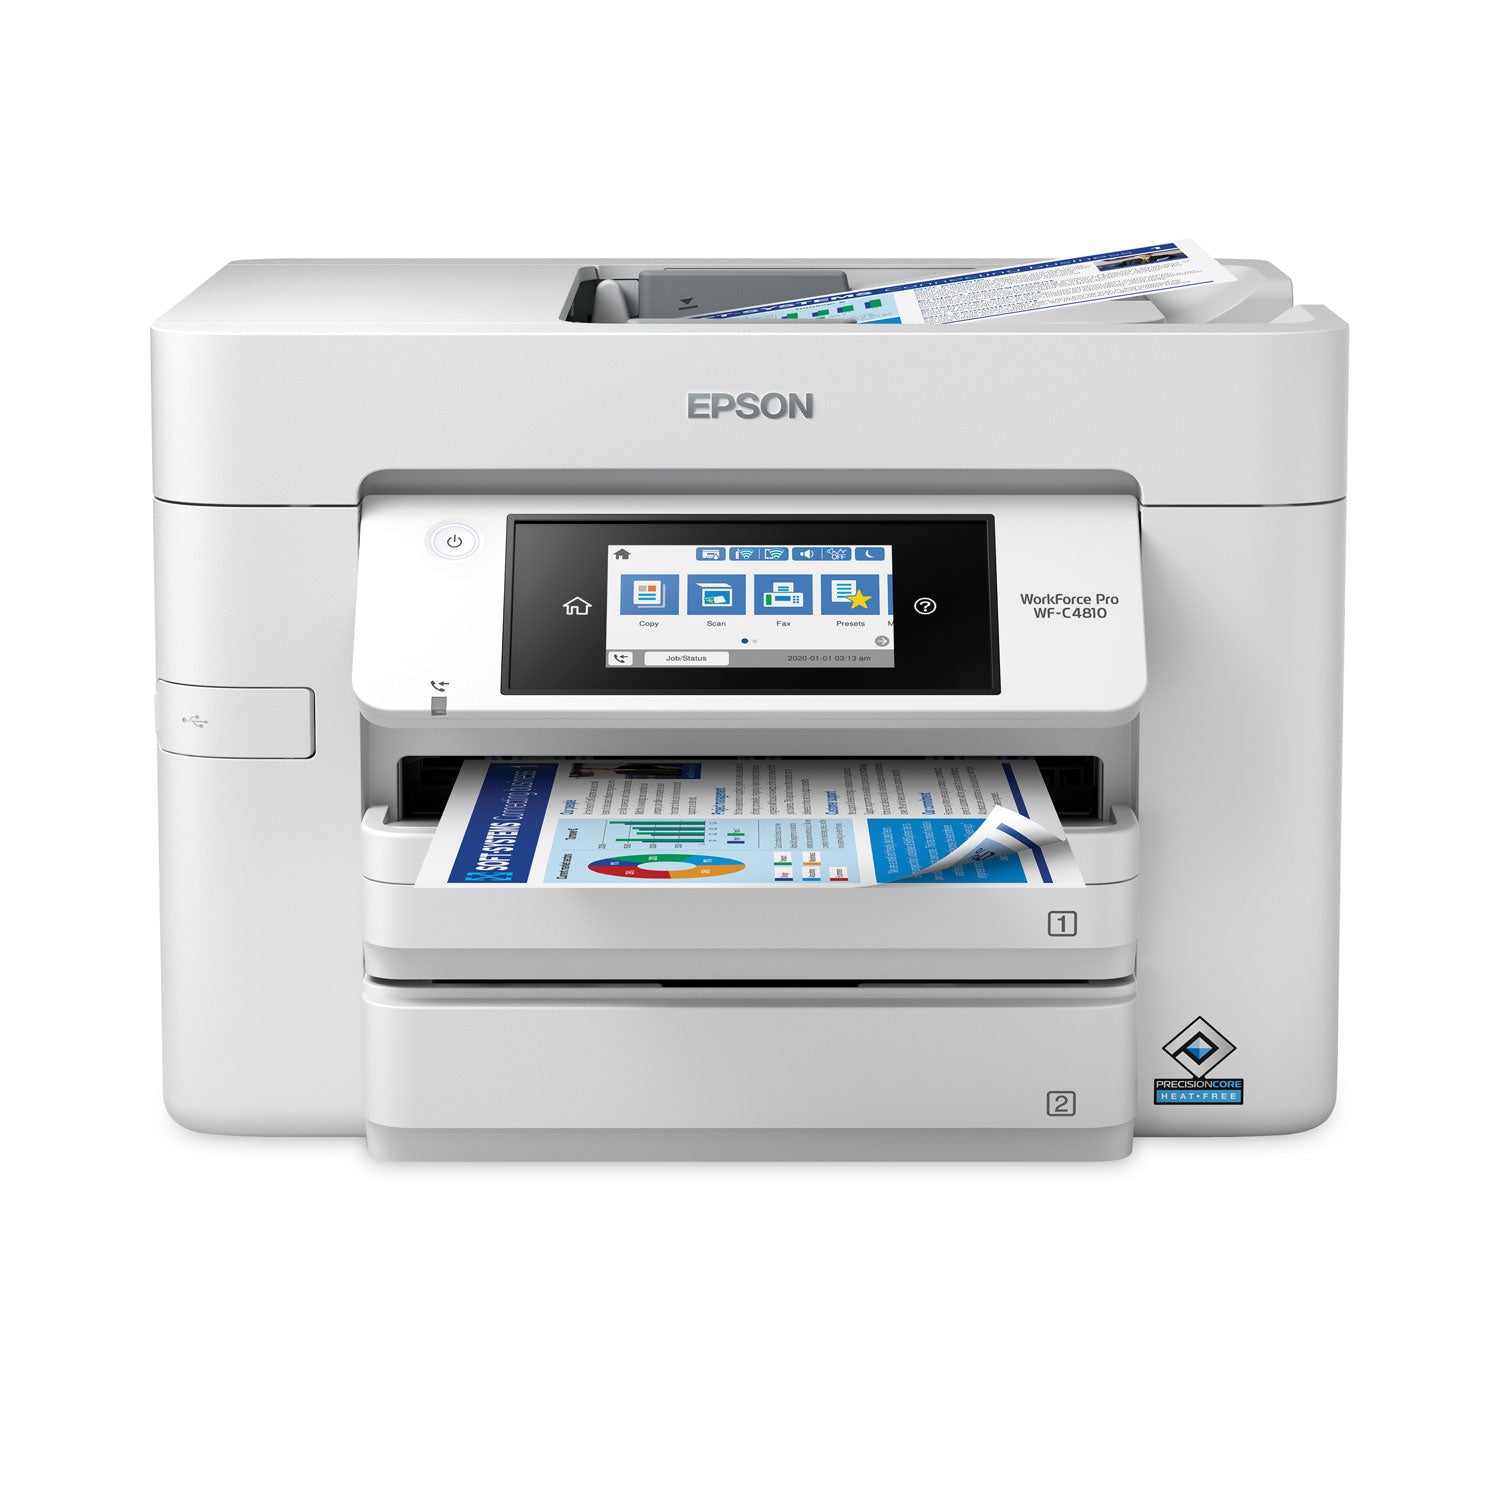 workforce-pro-wf-c4810-color-multifunction-printer-copy-fax-print-scan_epsc11cj05205 - 5